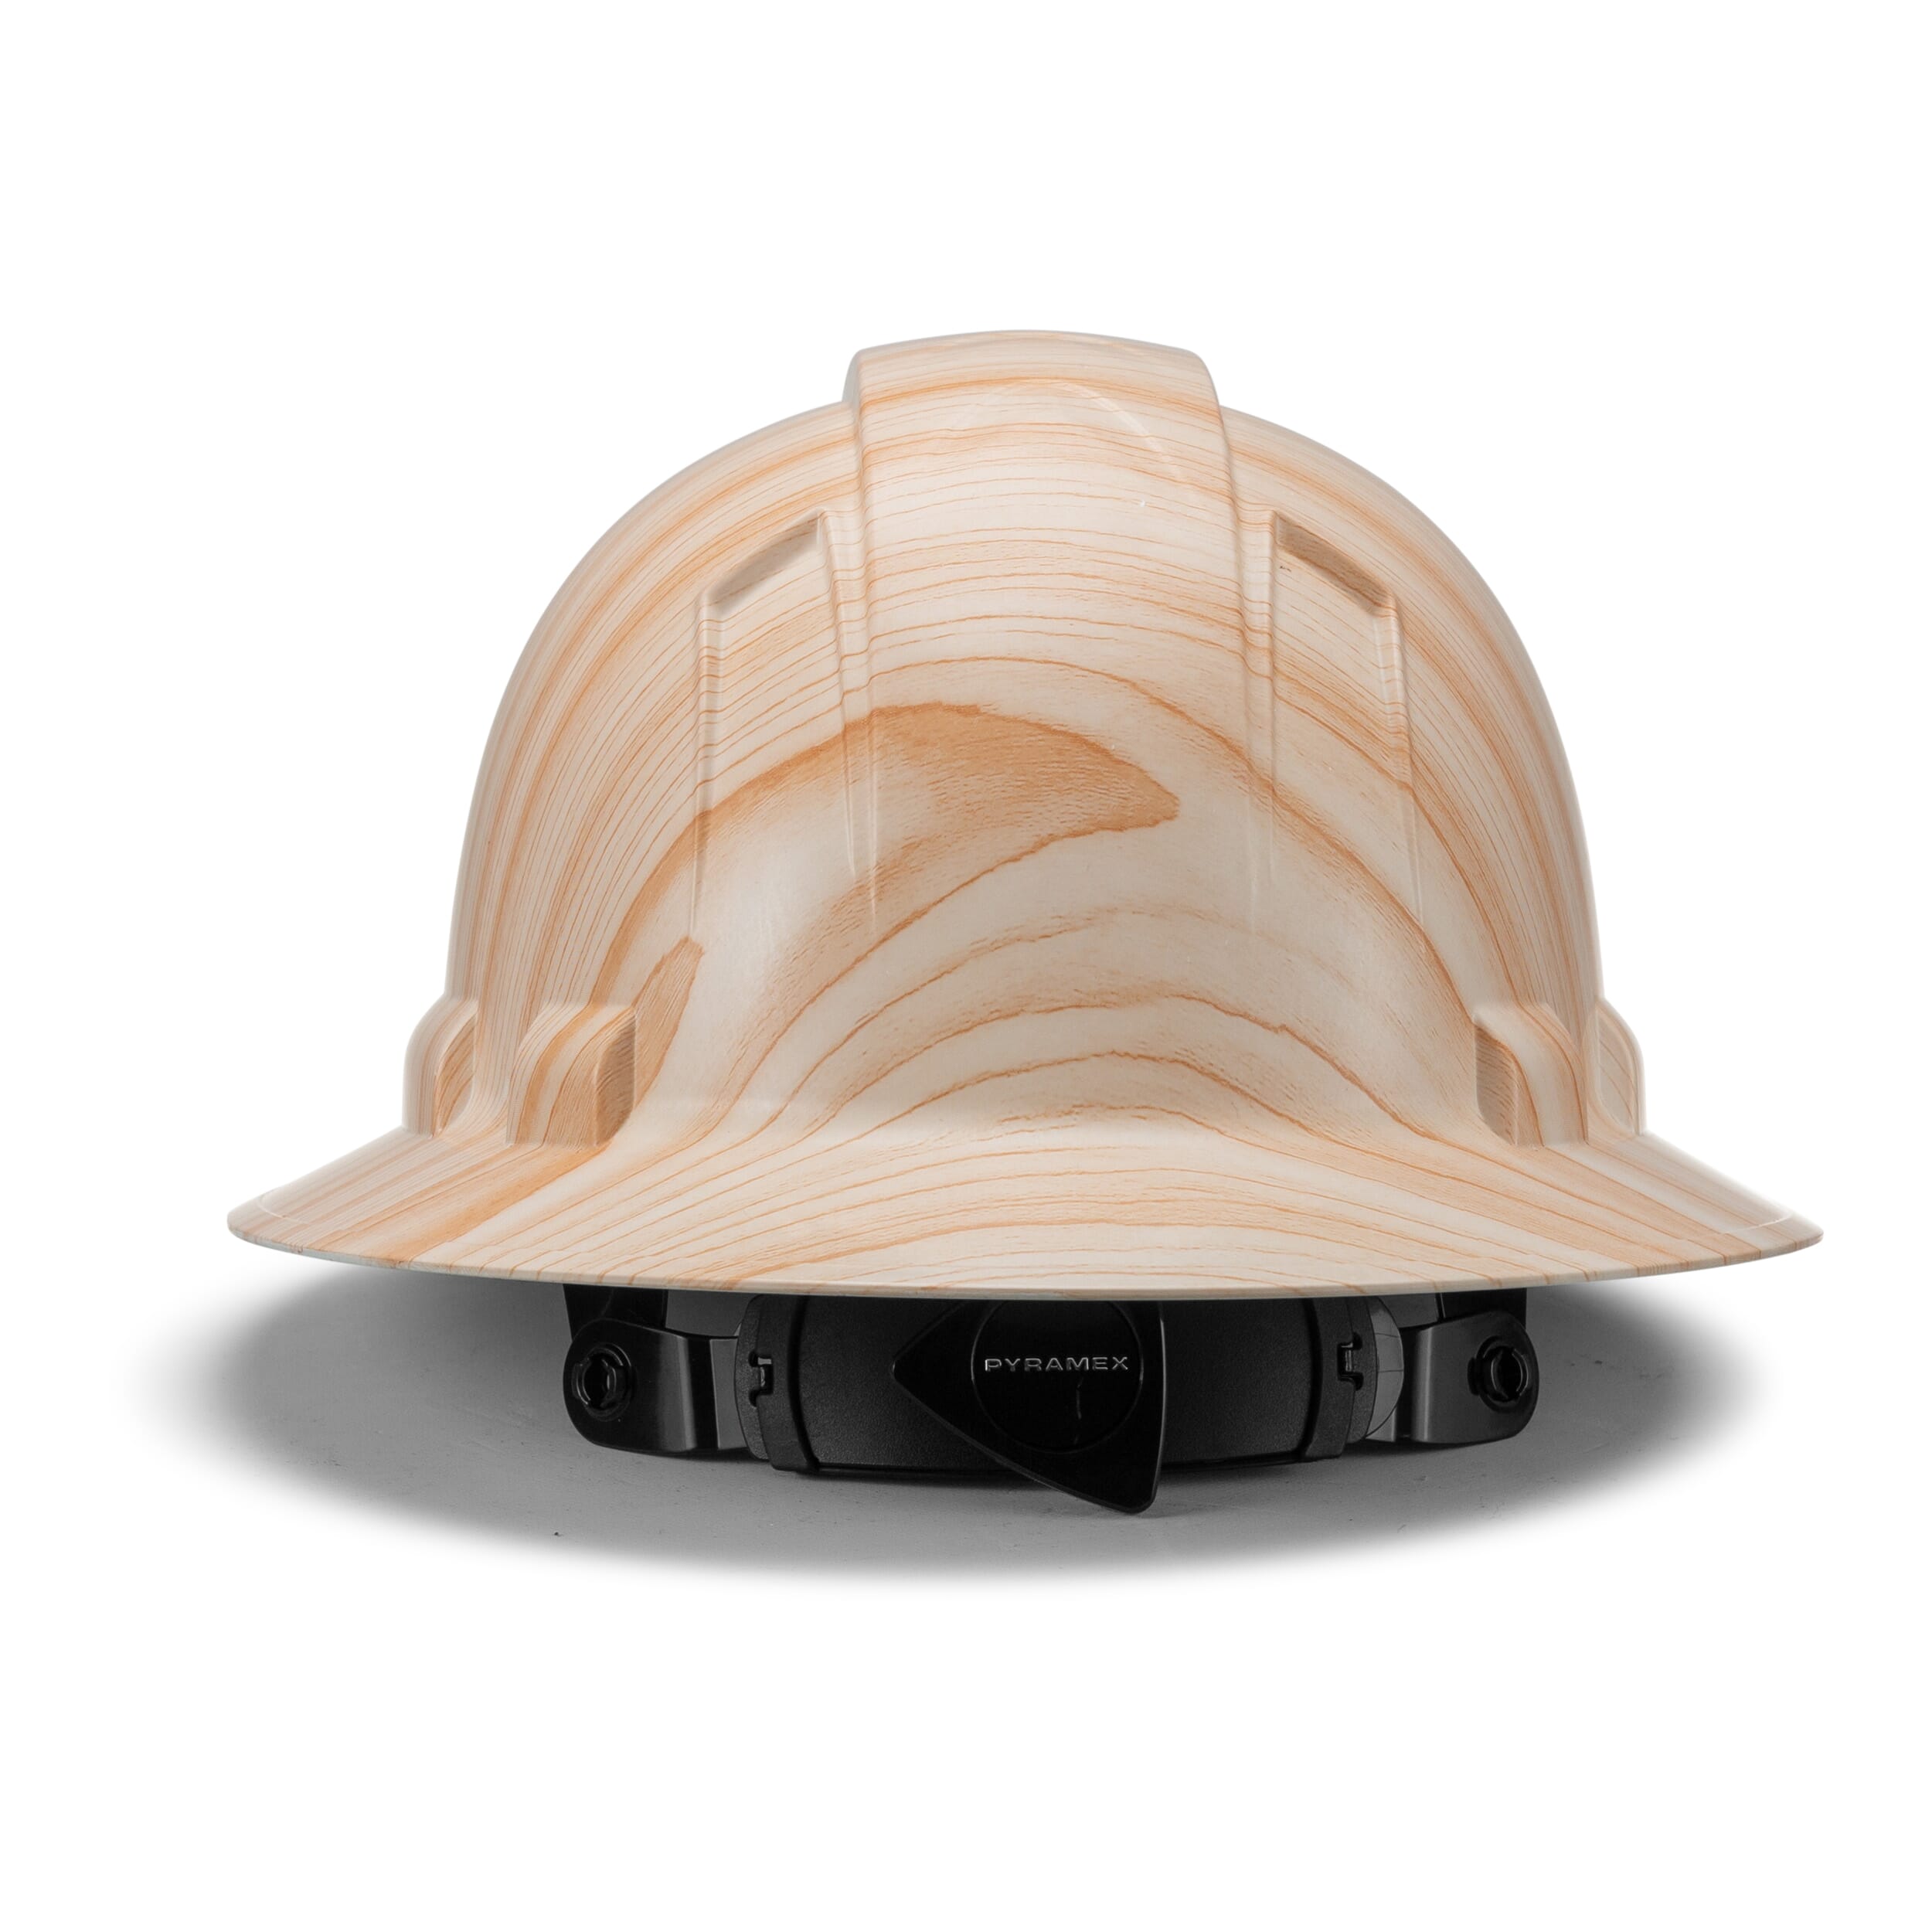 Full Brim Pyramex Hard Hat, Custom Sawdust Maverick Design, Safety Helmet, 6 Point